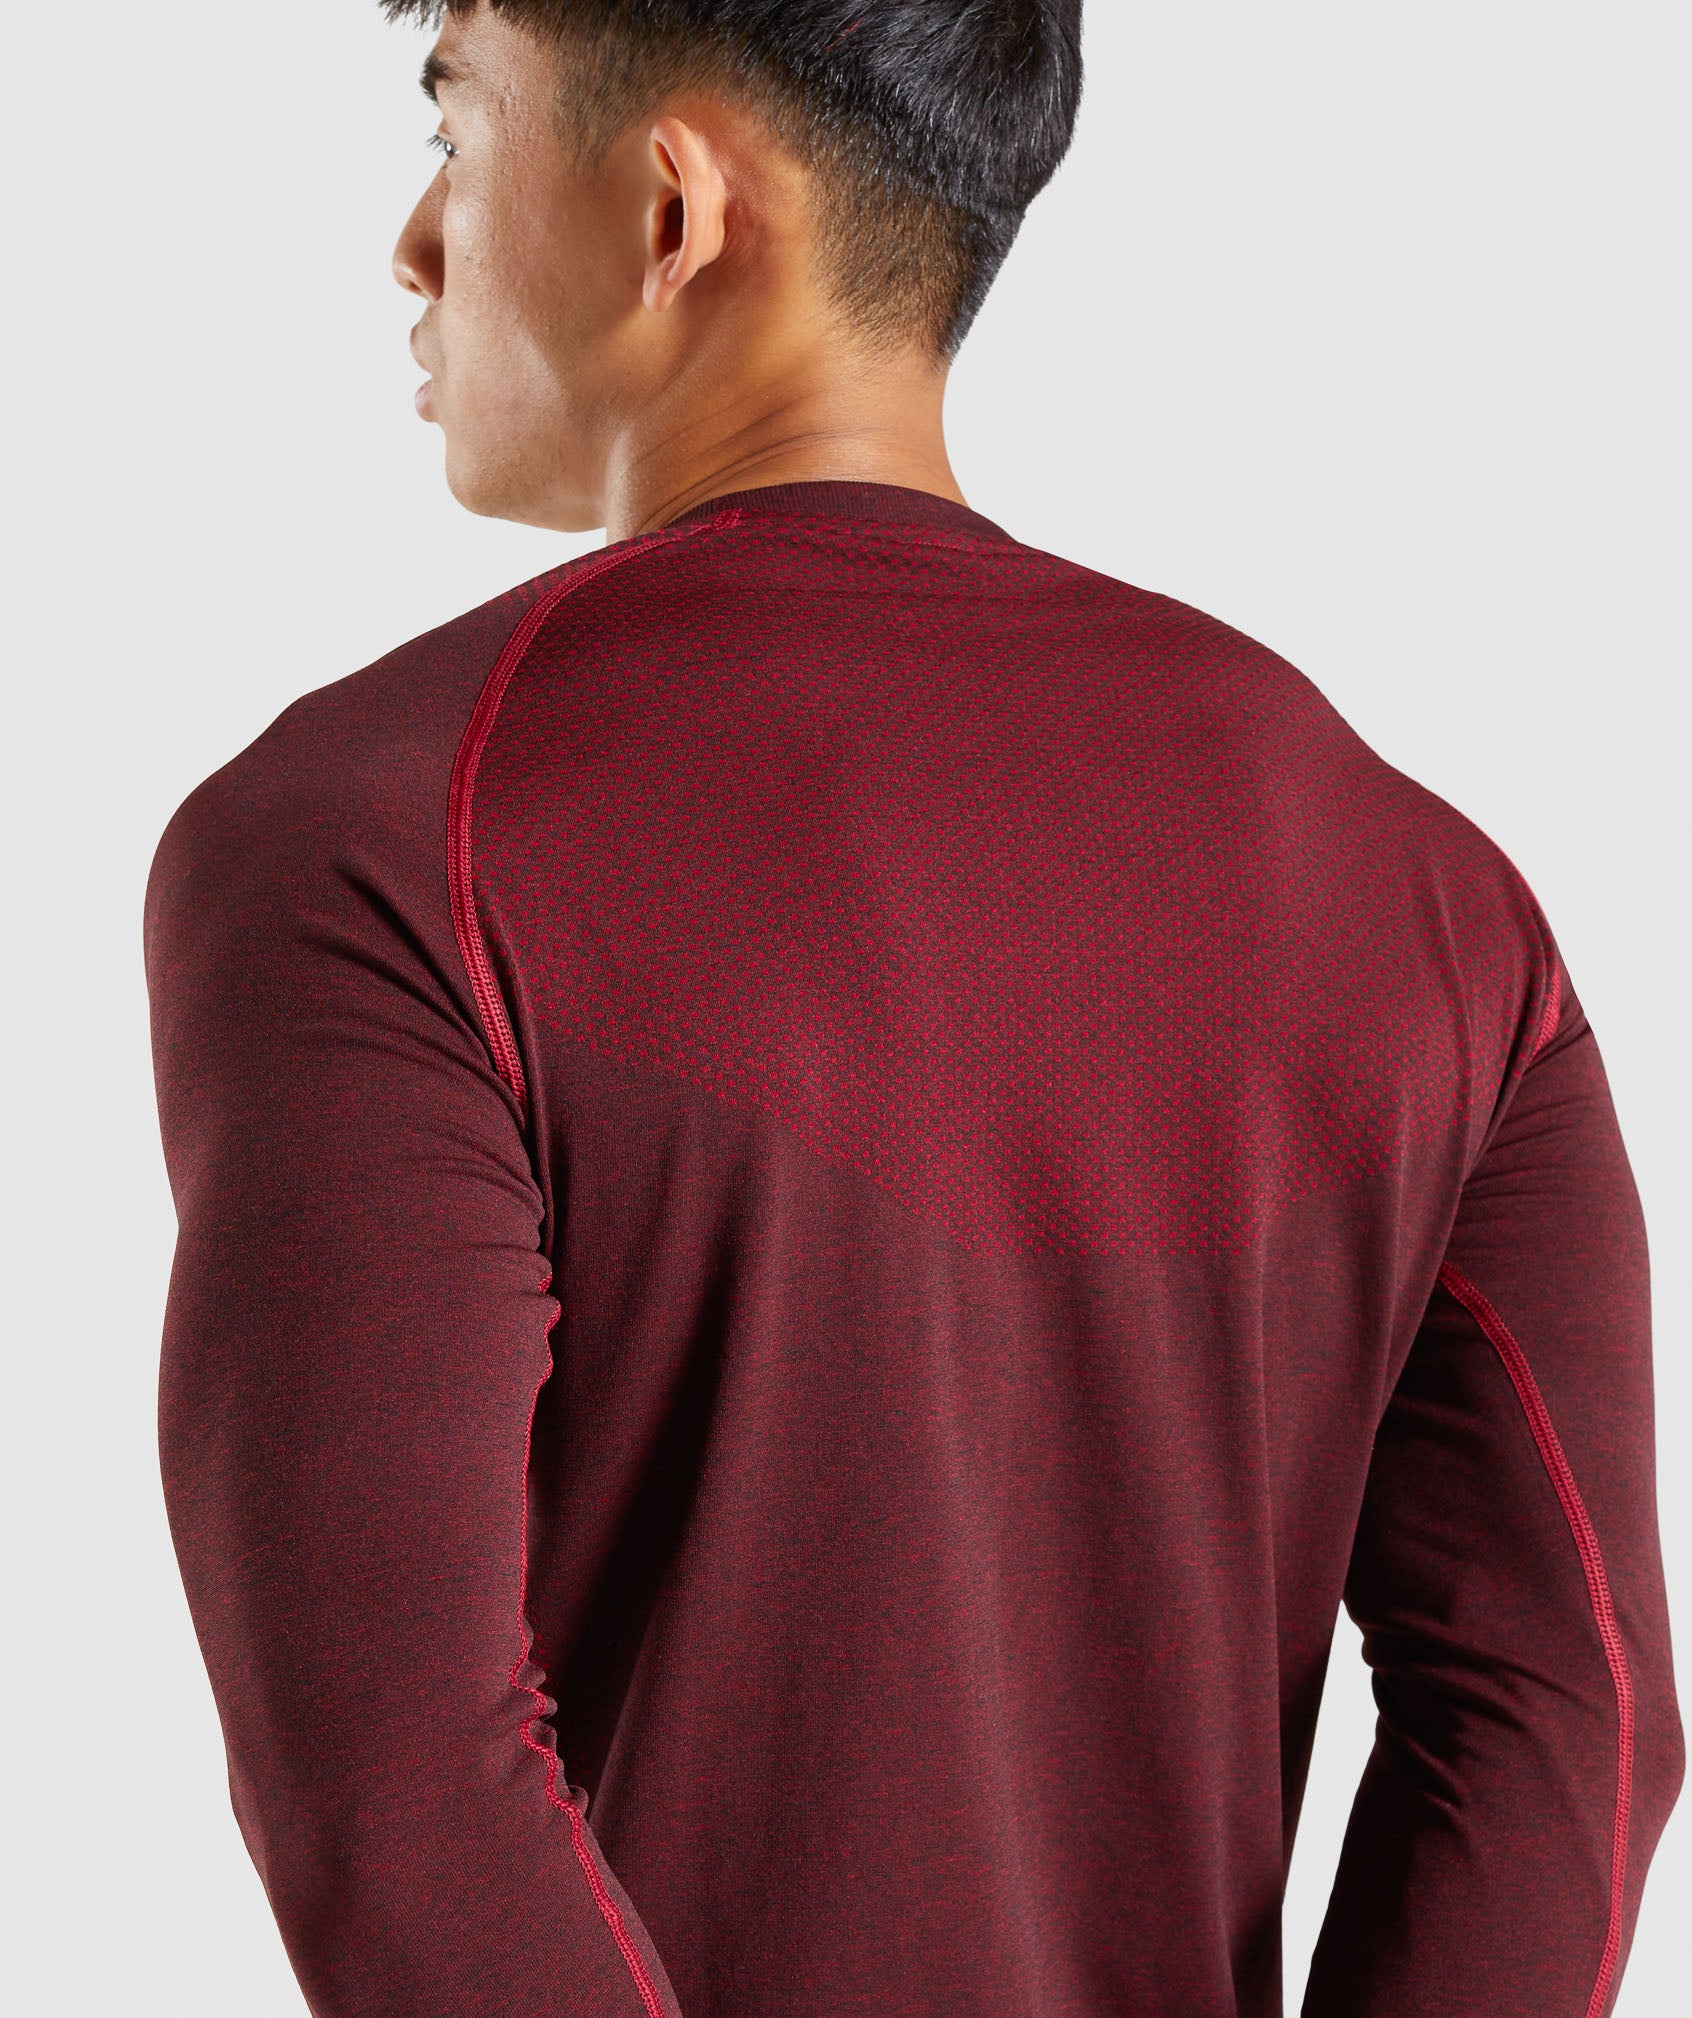 Vital Seamless Long Sleeve T-Shirt in Burgundy Marl